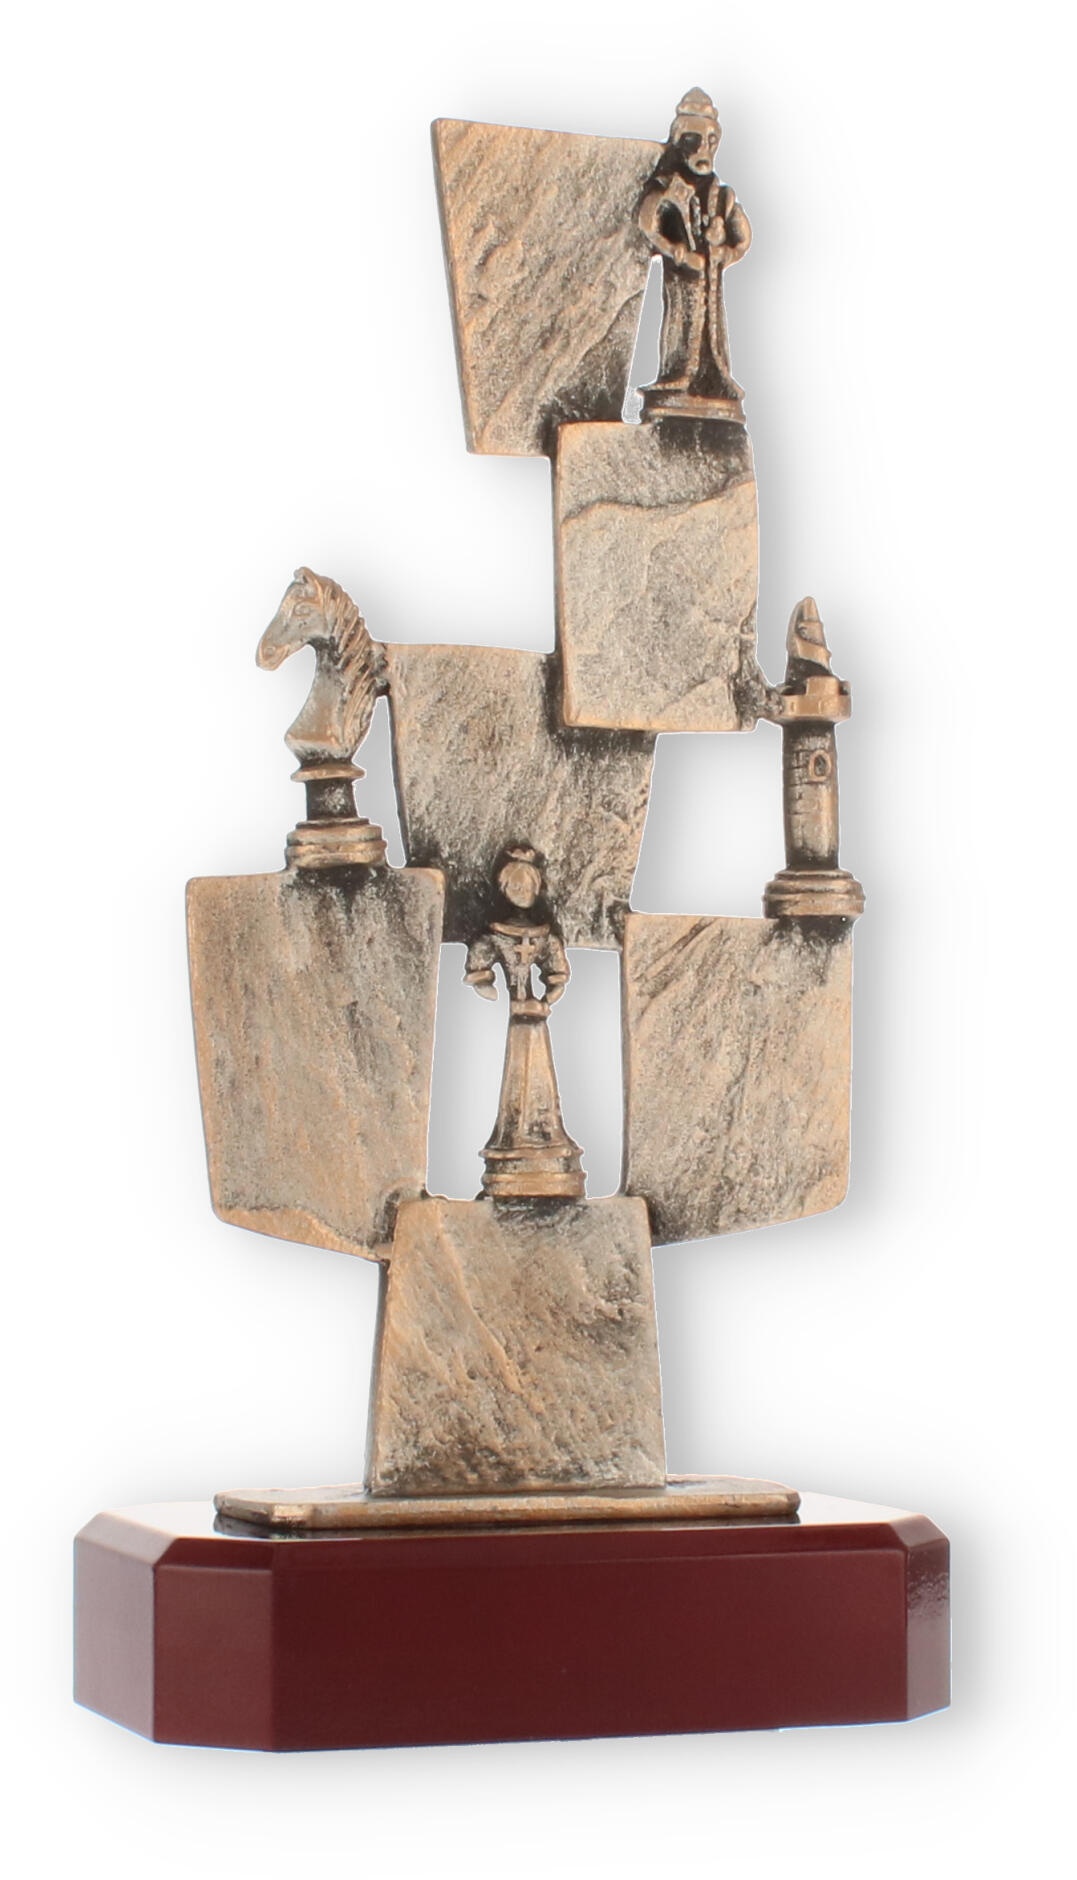 Pokal Zamakfigur Schachfiguren altgold auf mahagonifarbenen Holzsockel 26,0cm